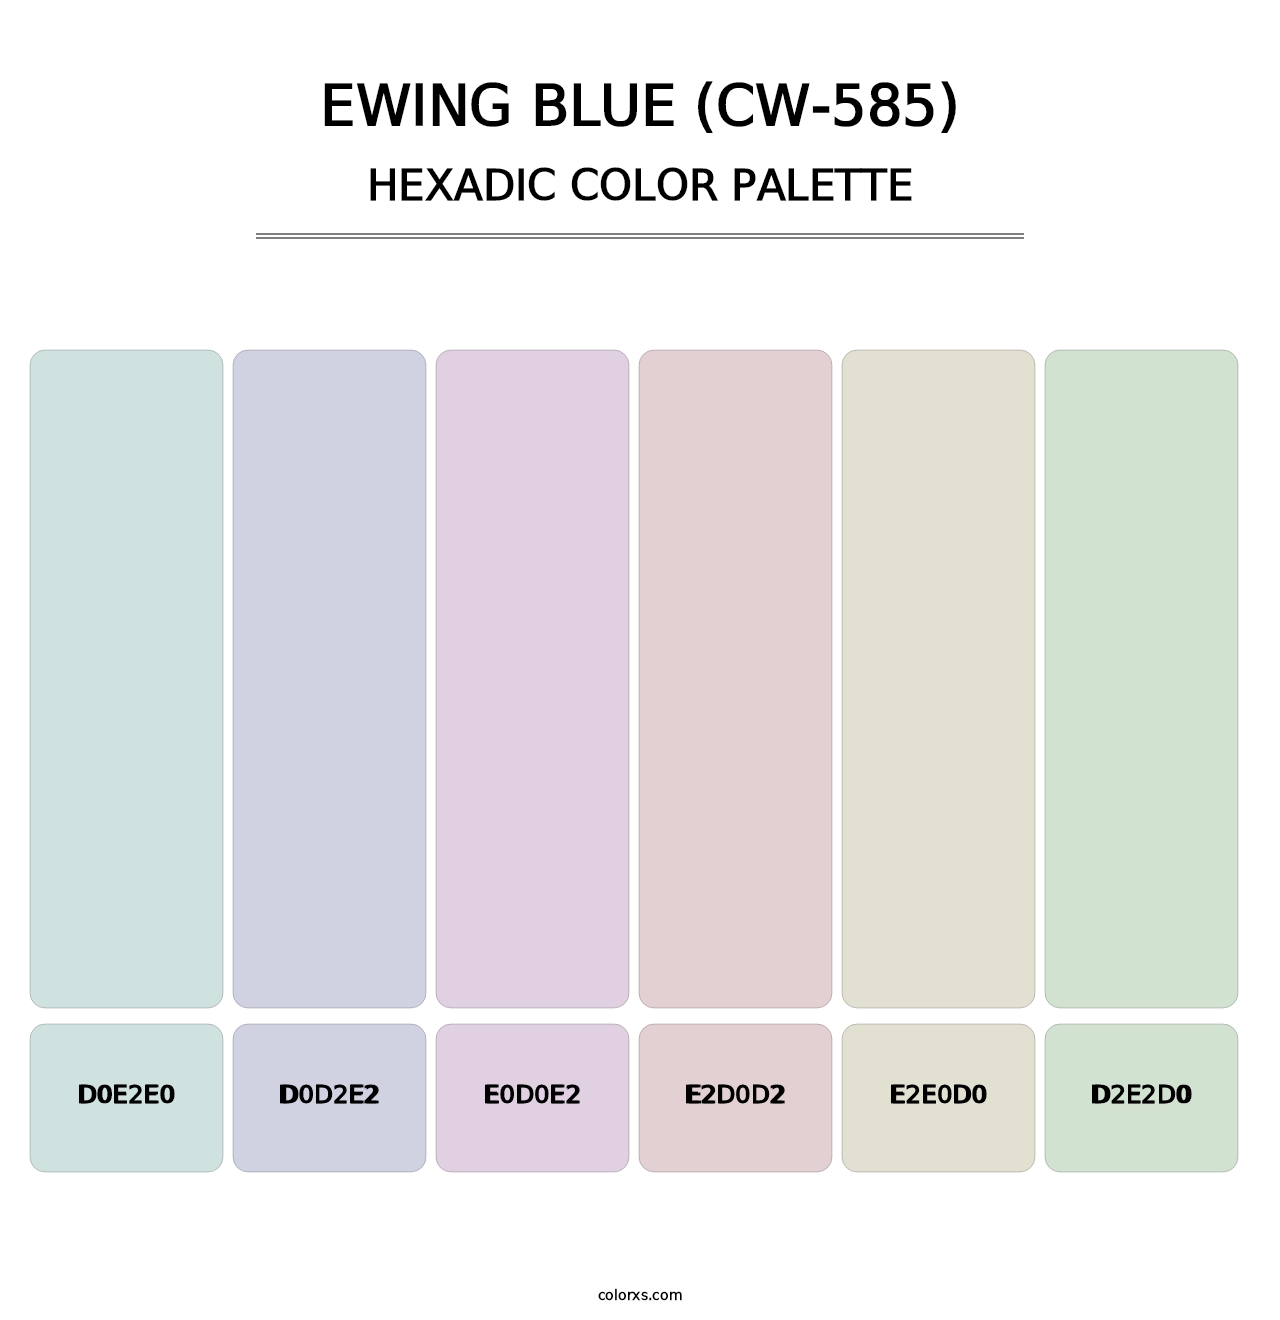 Ewing Blue (CW-585) - Hexadic Color Palette